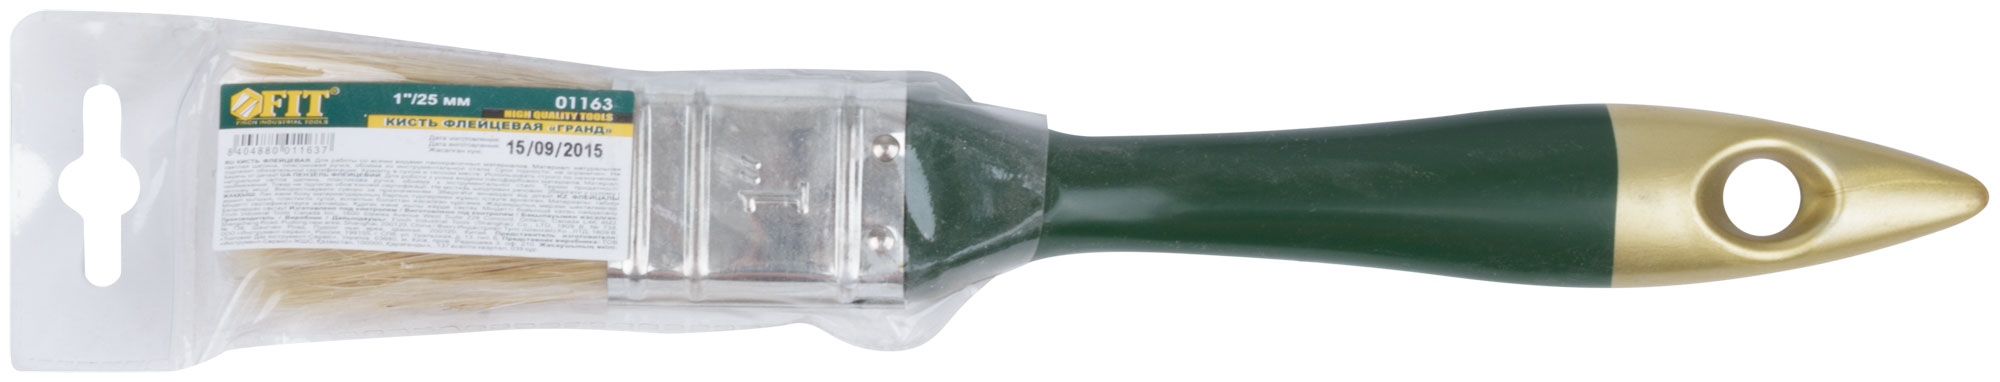 Кисть флейцевая "Гранд", натуральная светлая щетина, пластиковая ручка  1" (25 мм)